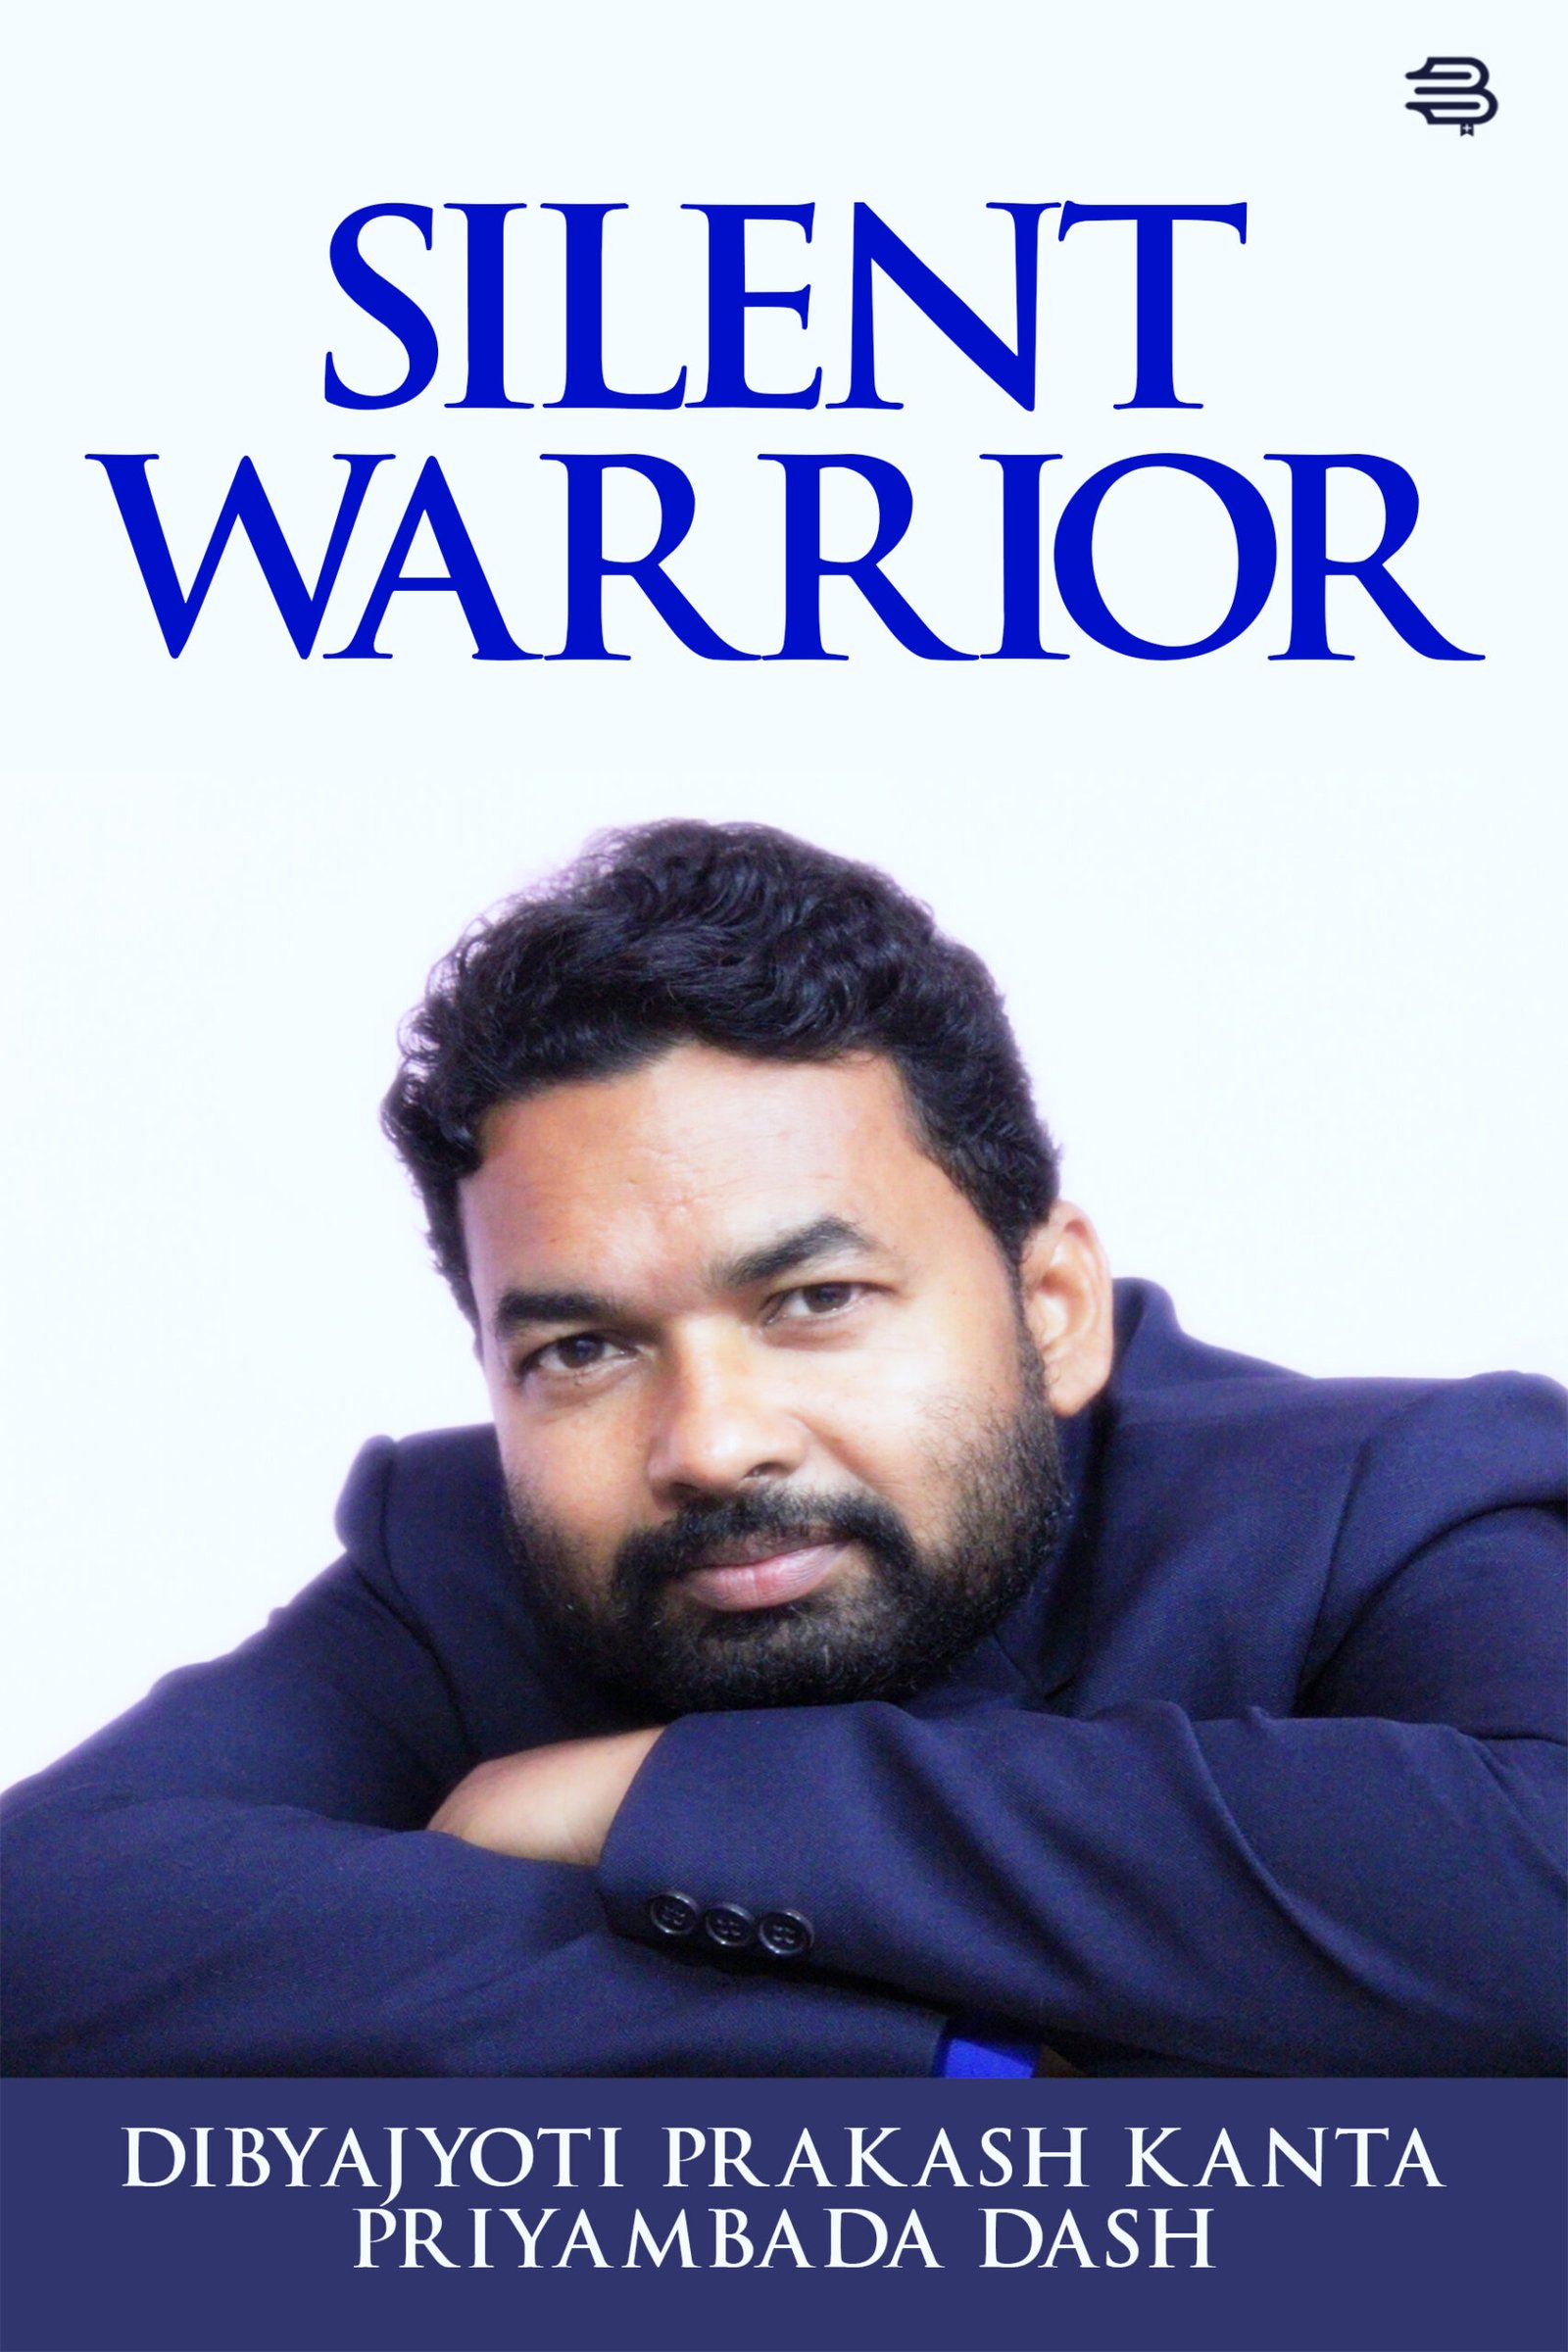 The Silent Warrior by (Dibyajyoti Prakash Kanta, Priyambada Dash)